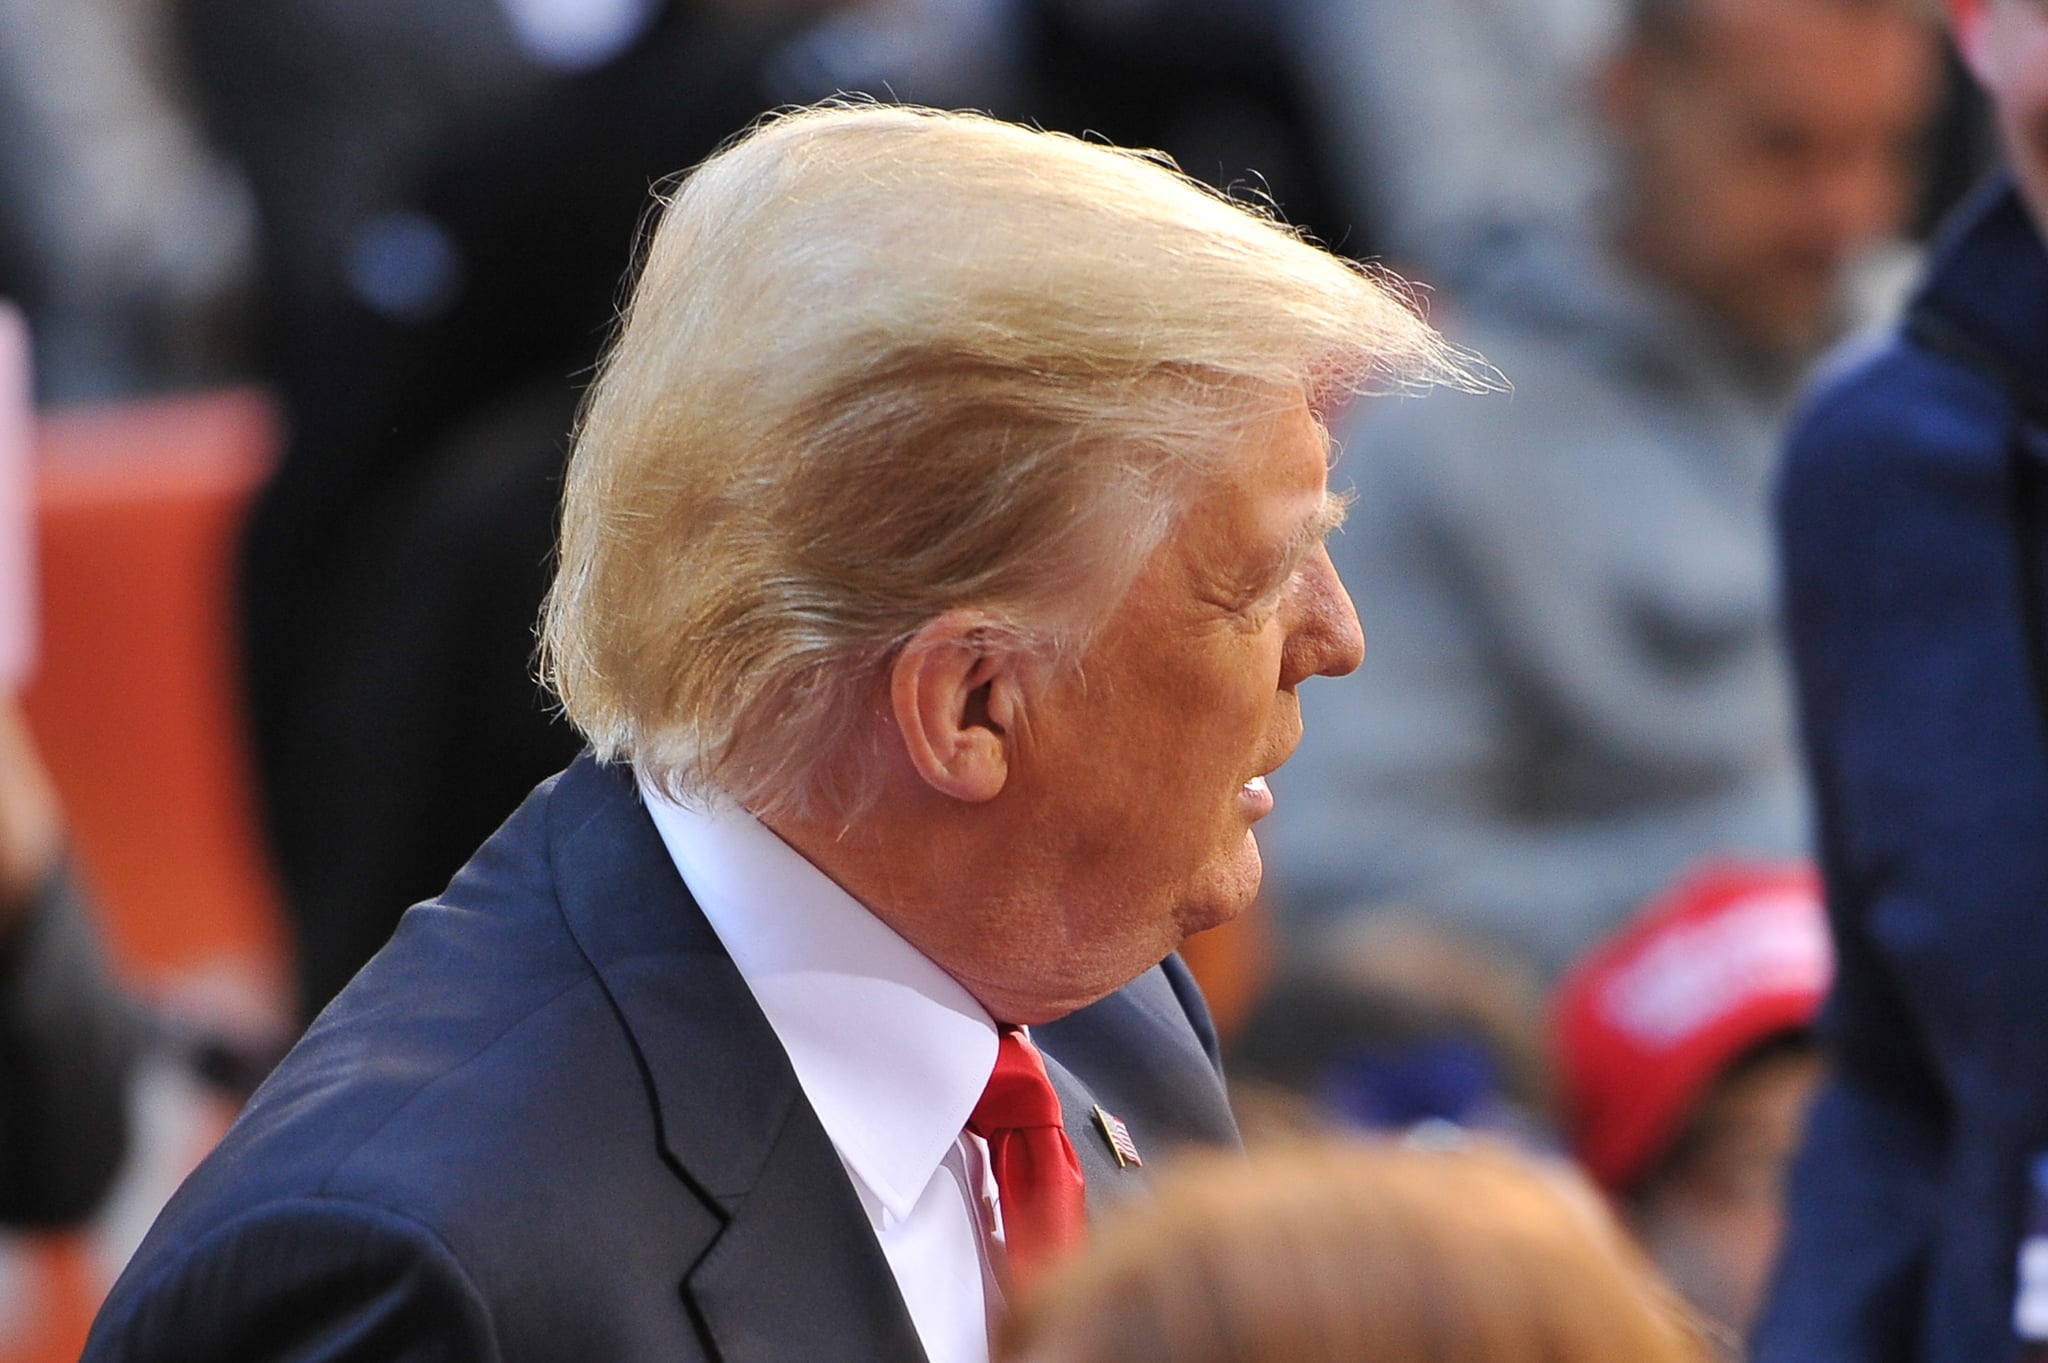 Trump's Hair Secrets Revealed - wide 9